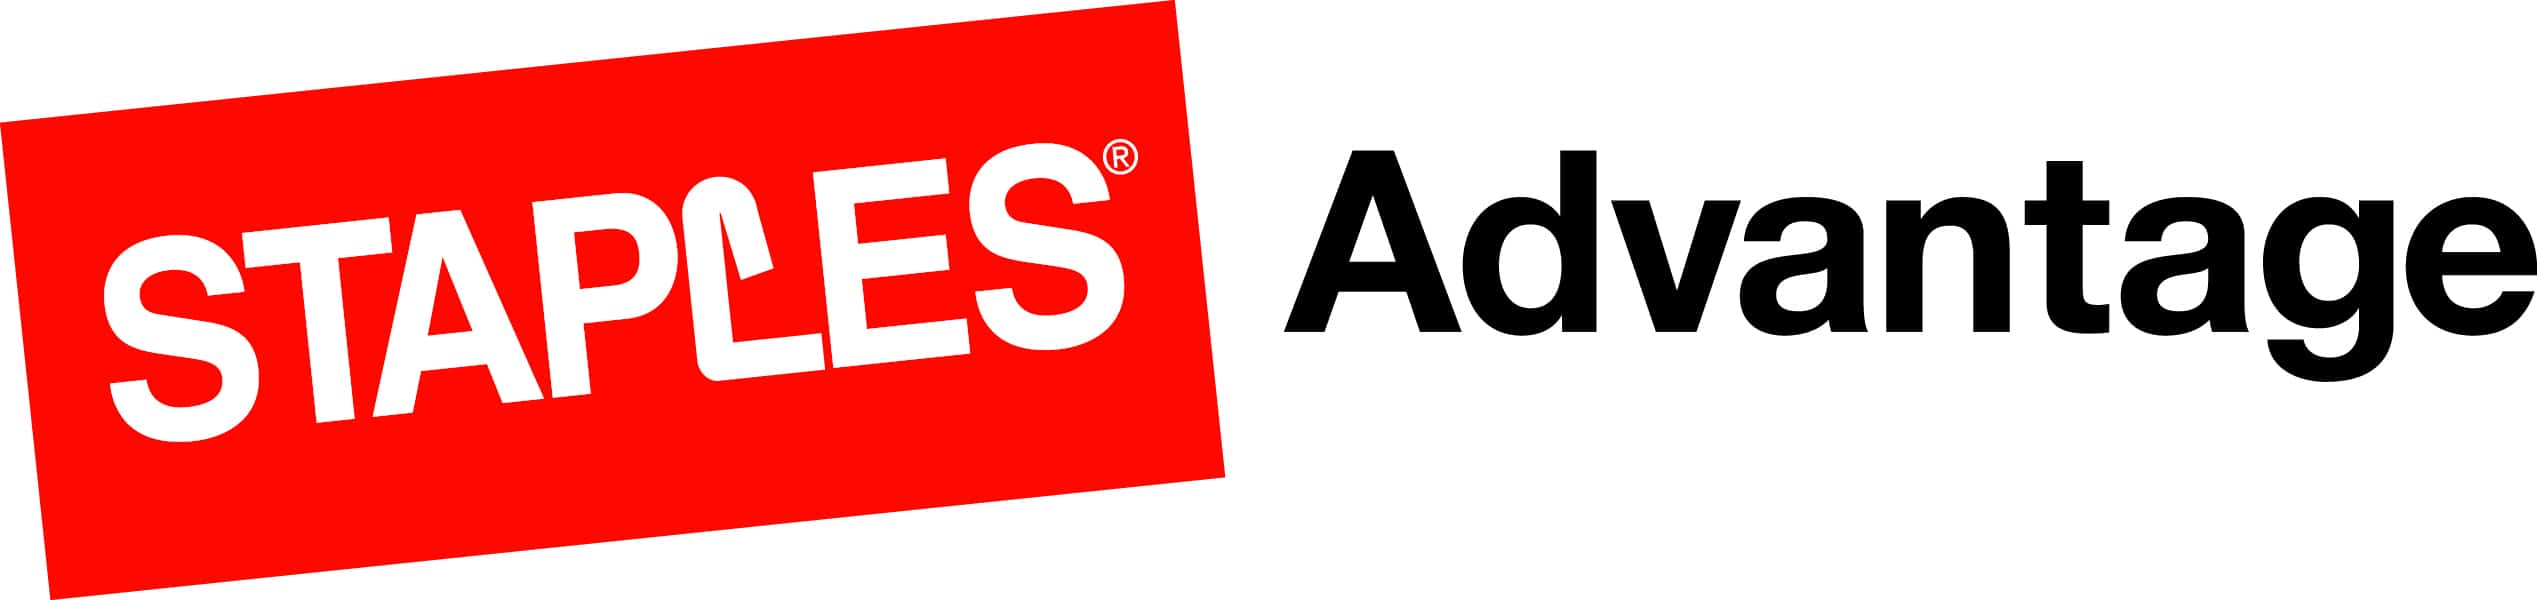 Advantage Logo - Staples Advantage logo. Digital Commerce 360